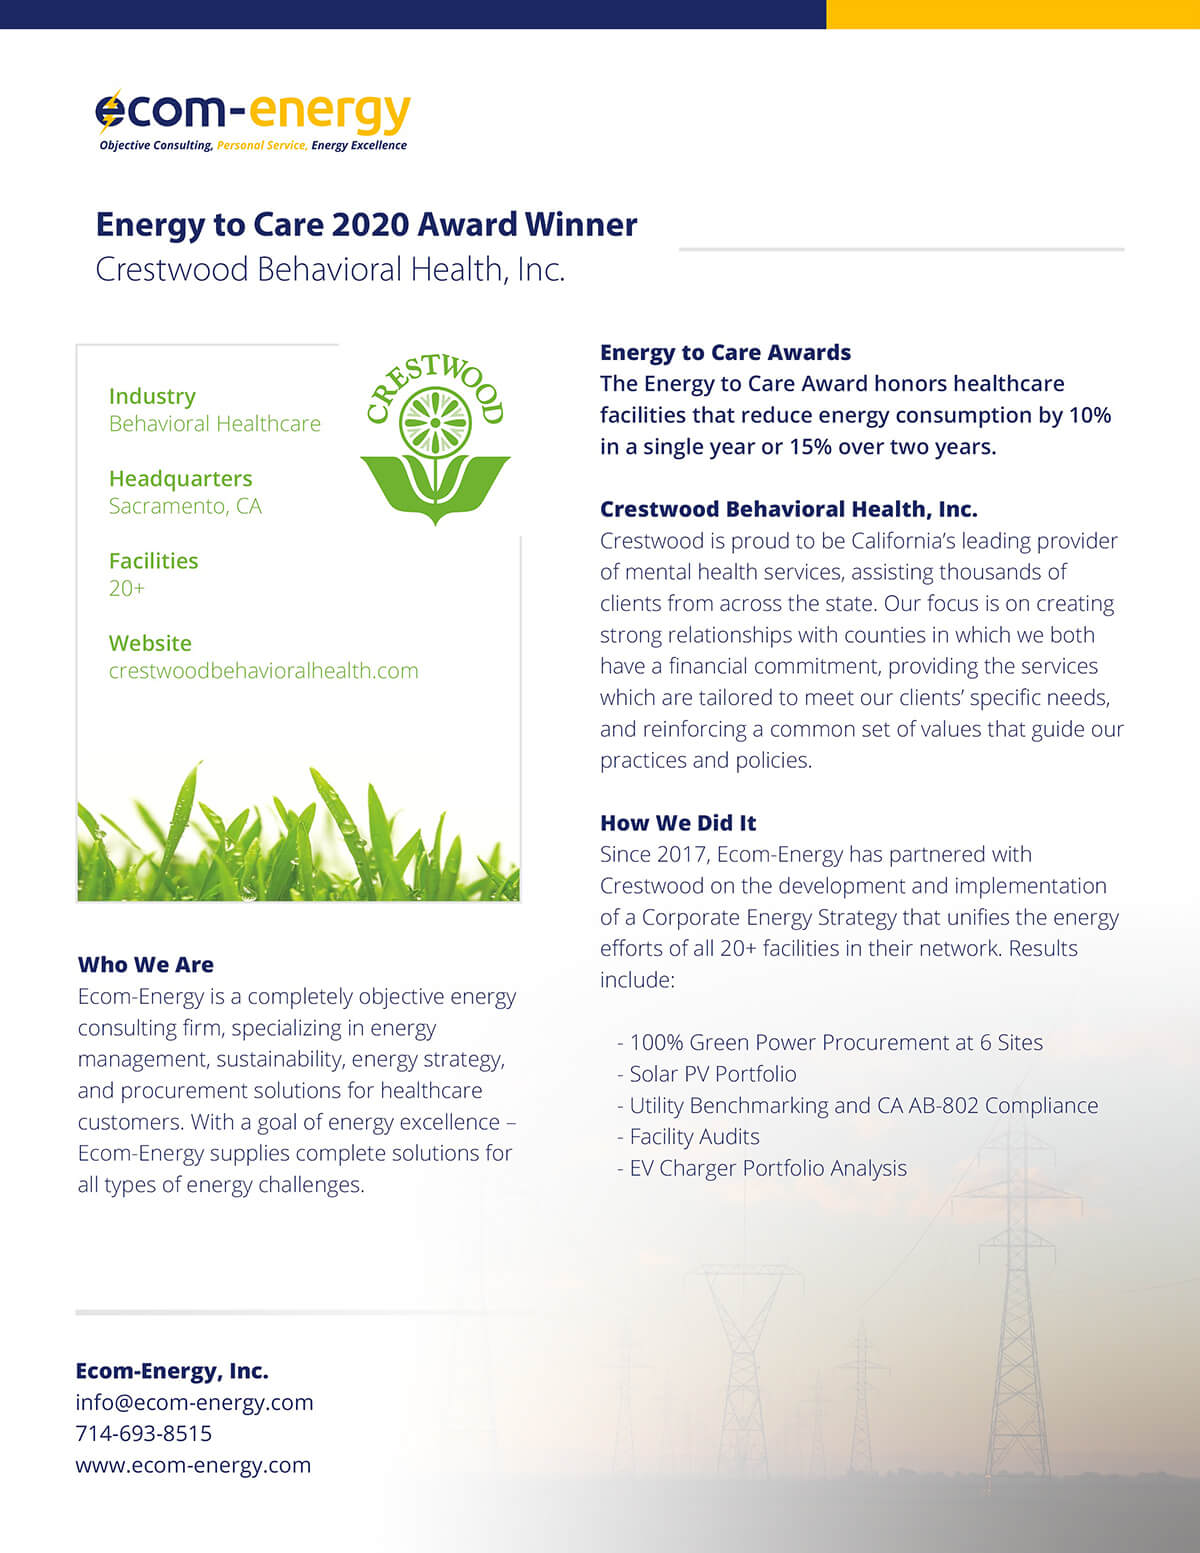 Energy to Care 2020 Award Winner Press Release